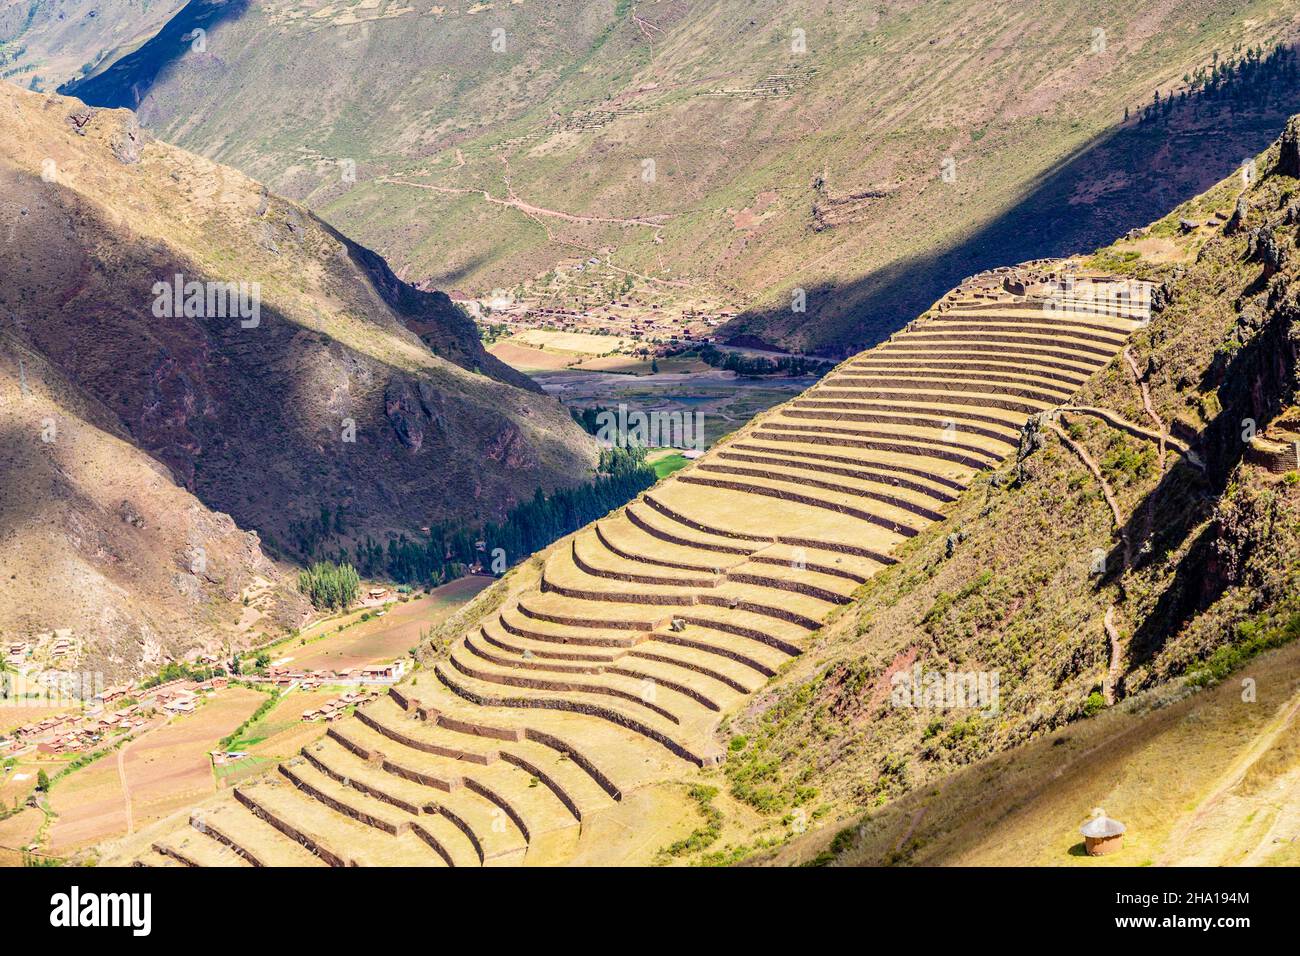 Ancient Incan farm terraces on the mountain slope, Pisac, Peru Stock Photo